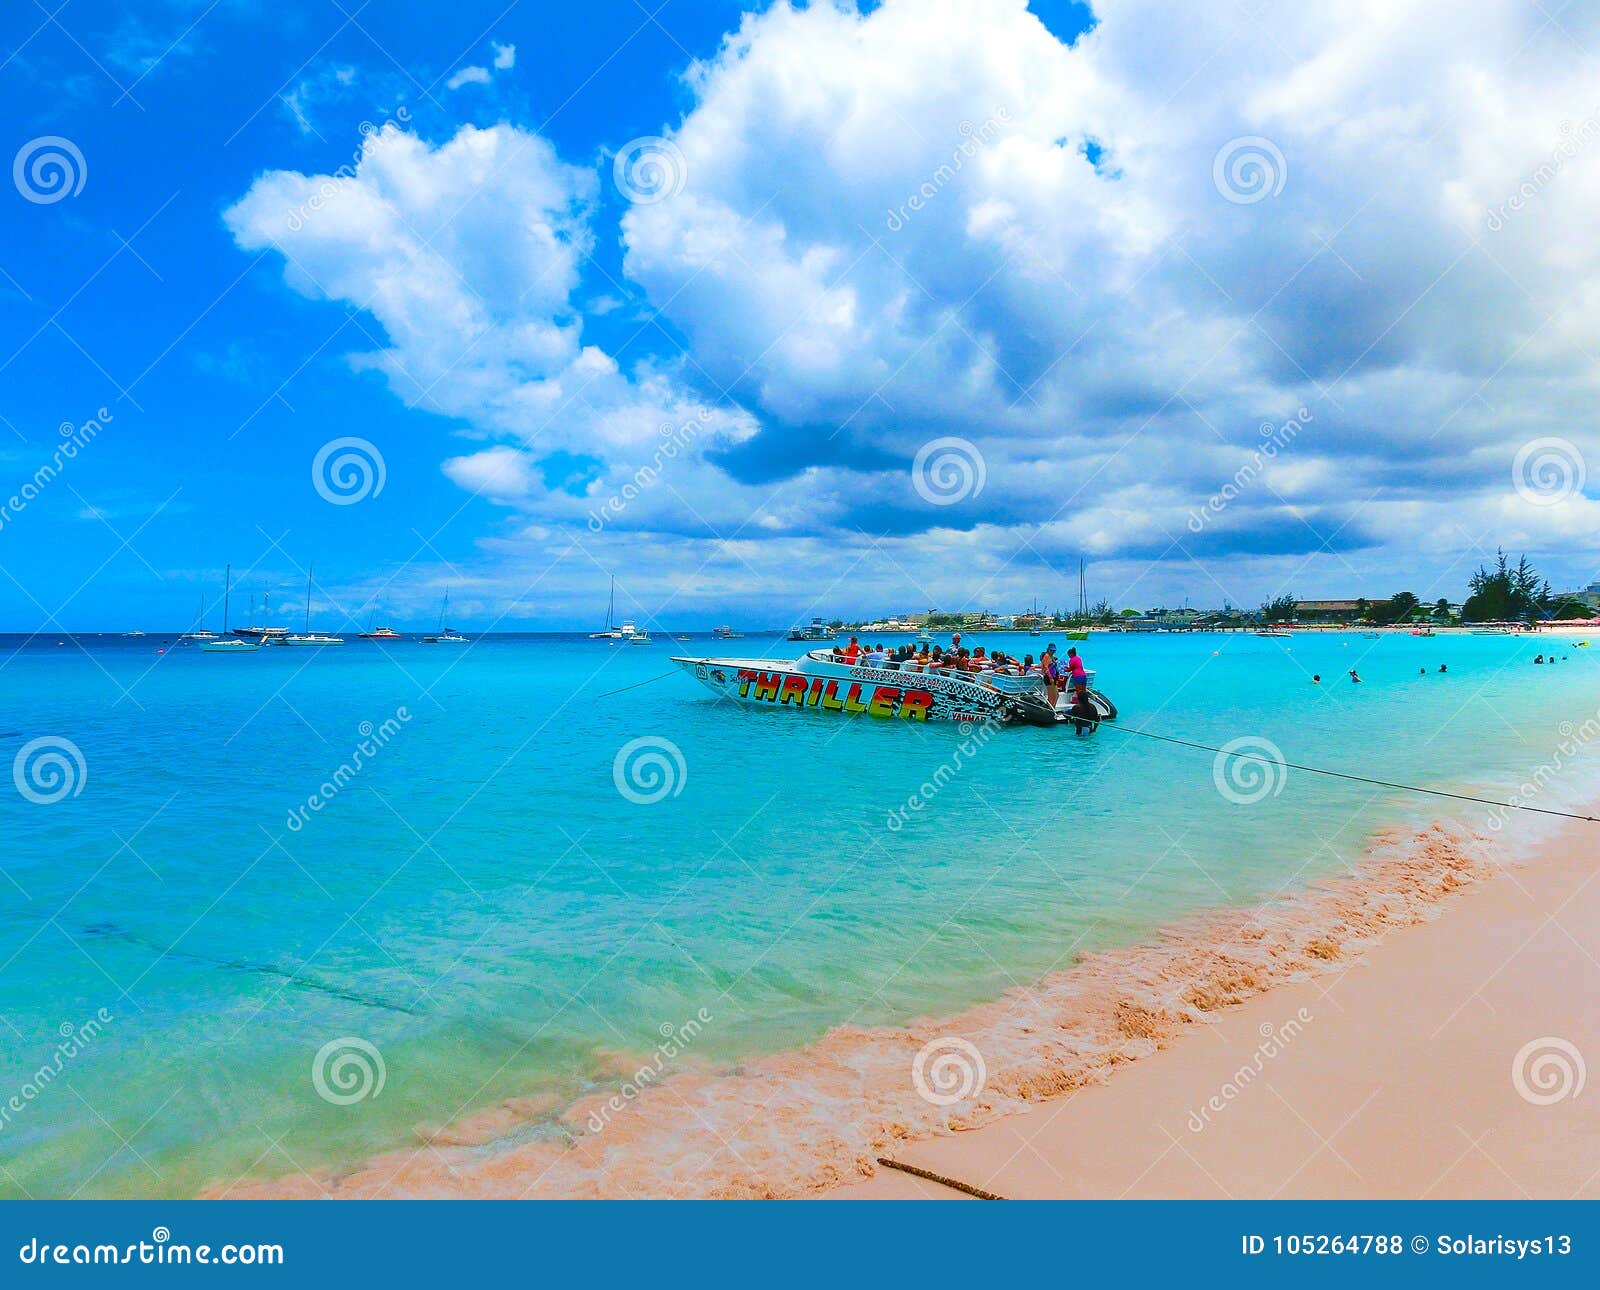 Bridgetown Barbados May 11 2016 The Tropical Beach Barbados